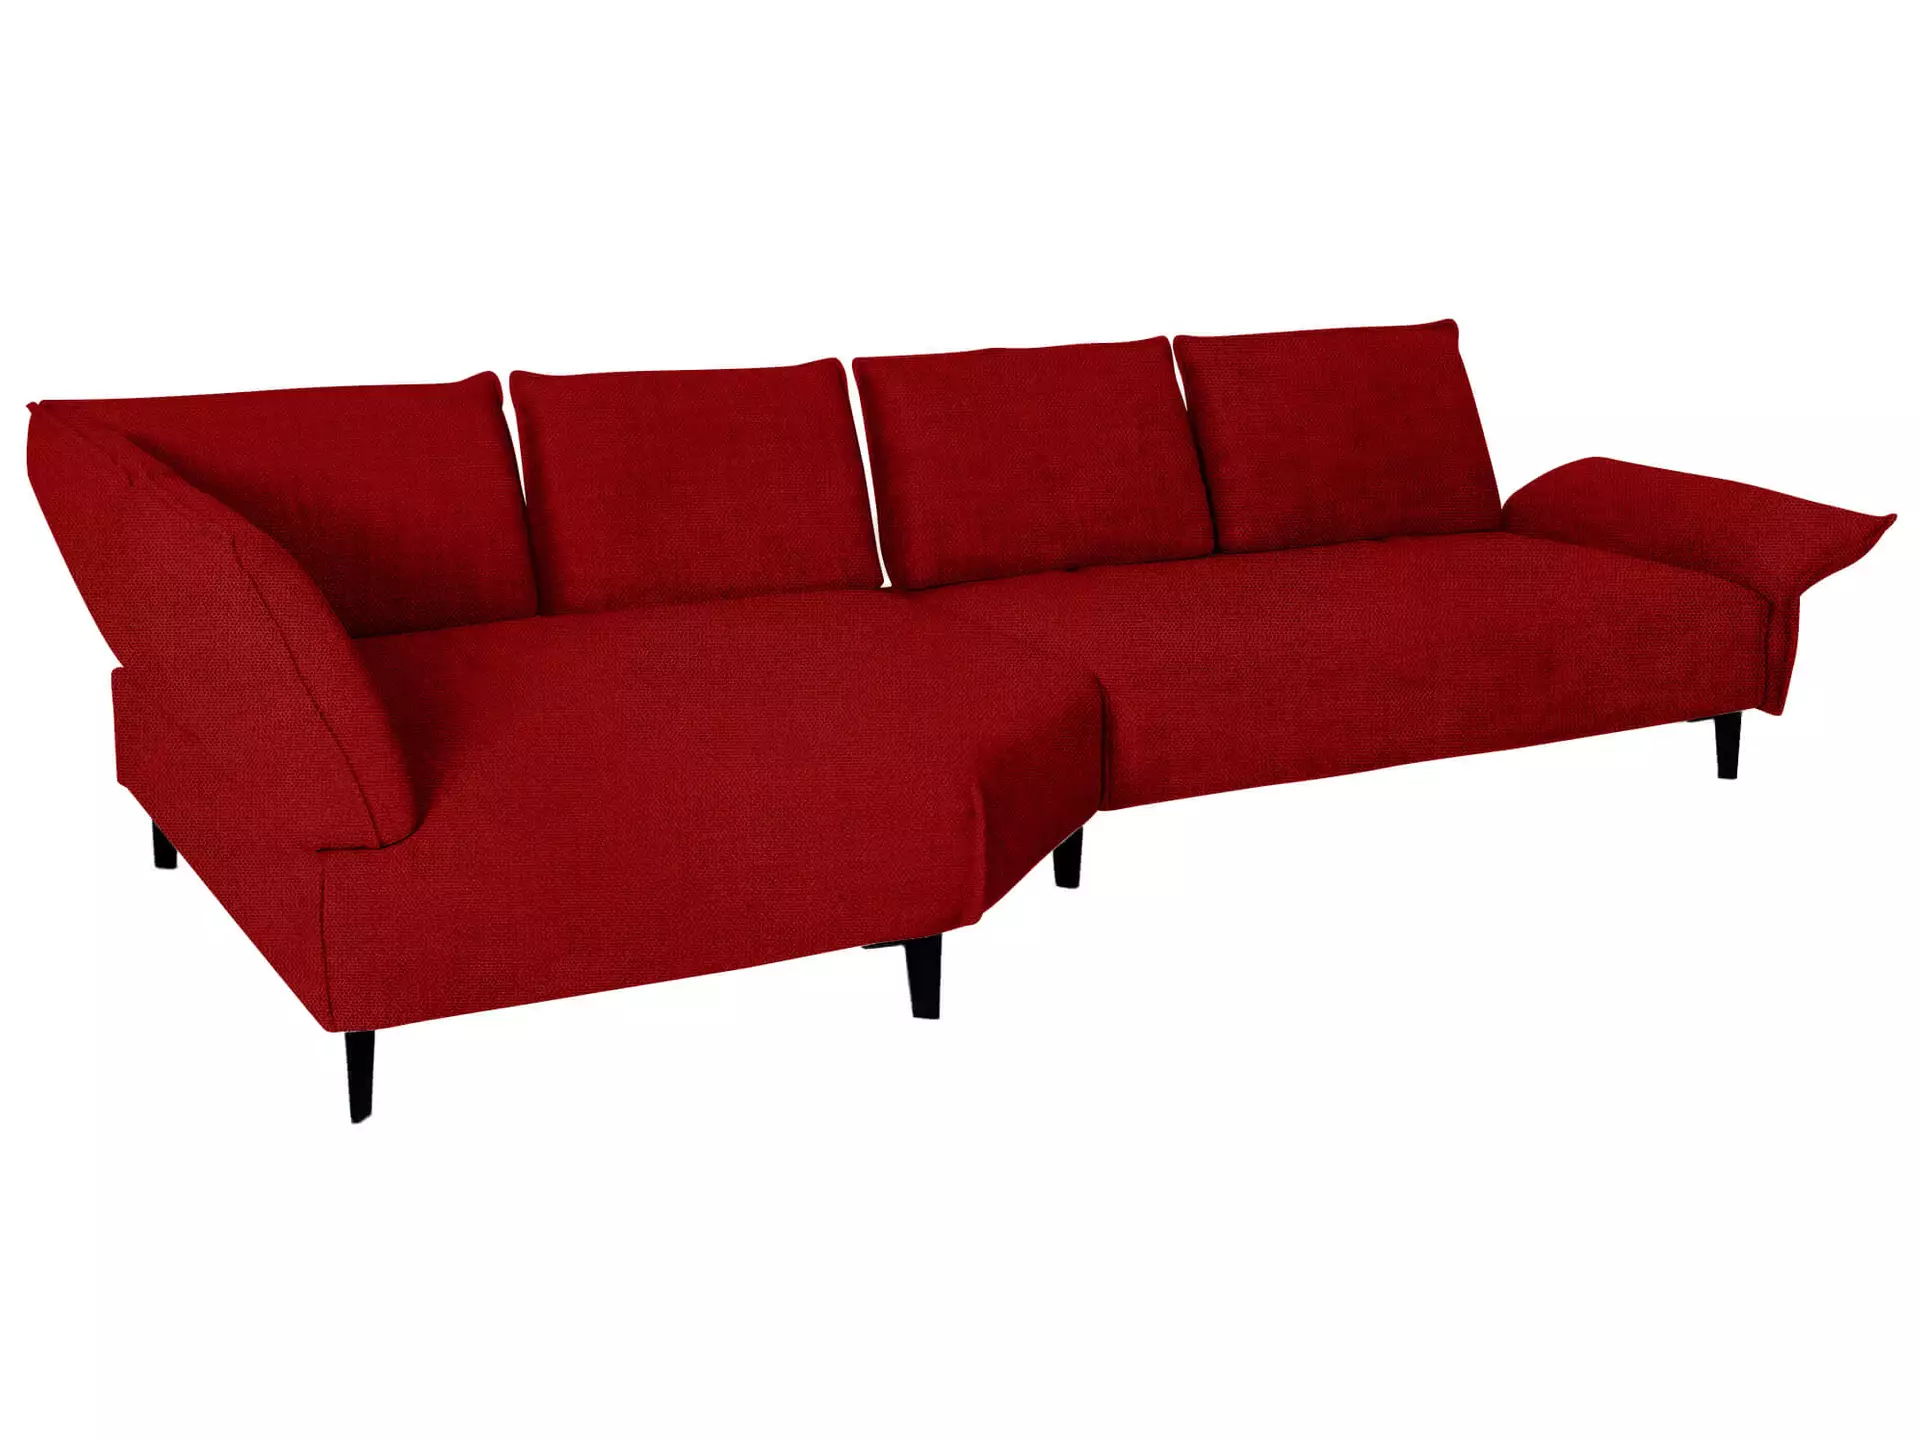 Sofa Bochum Basic Schillig Willi / Farbe: Red / Material: Stoff Basic